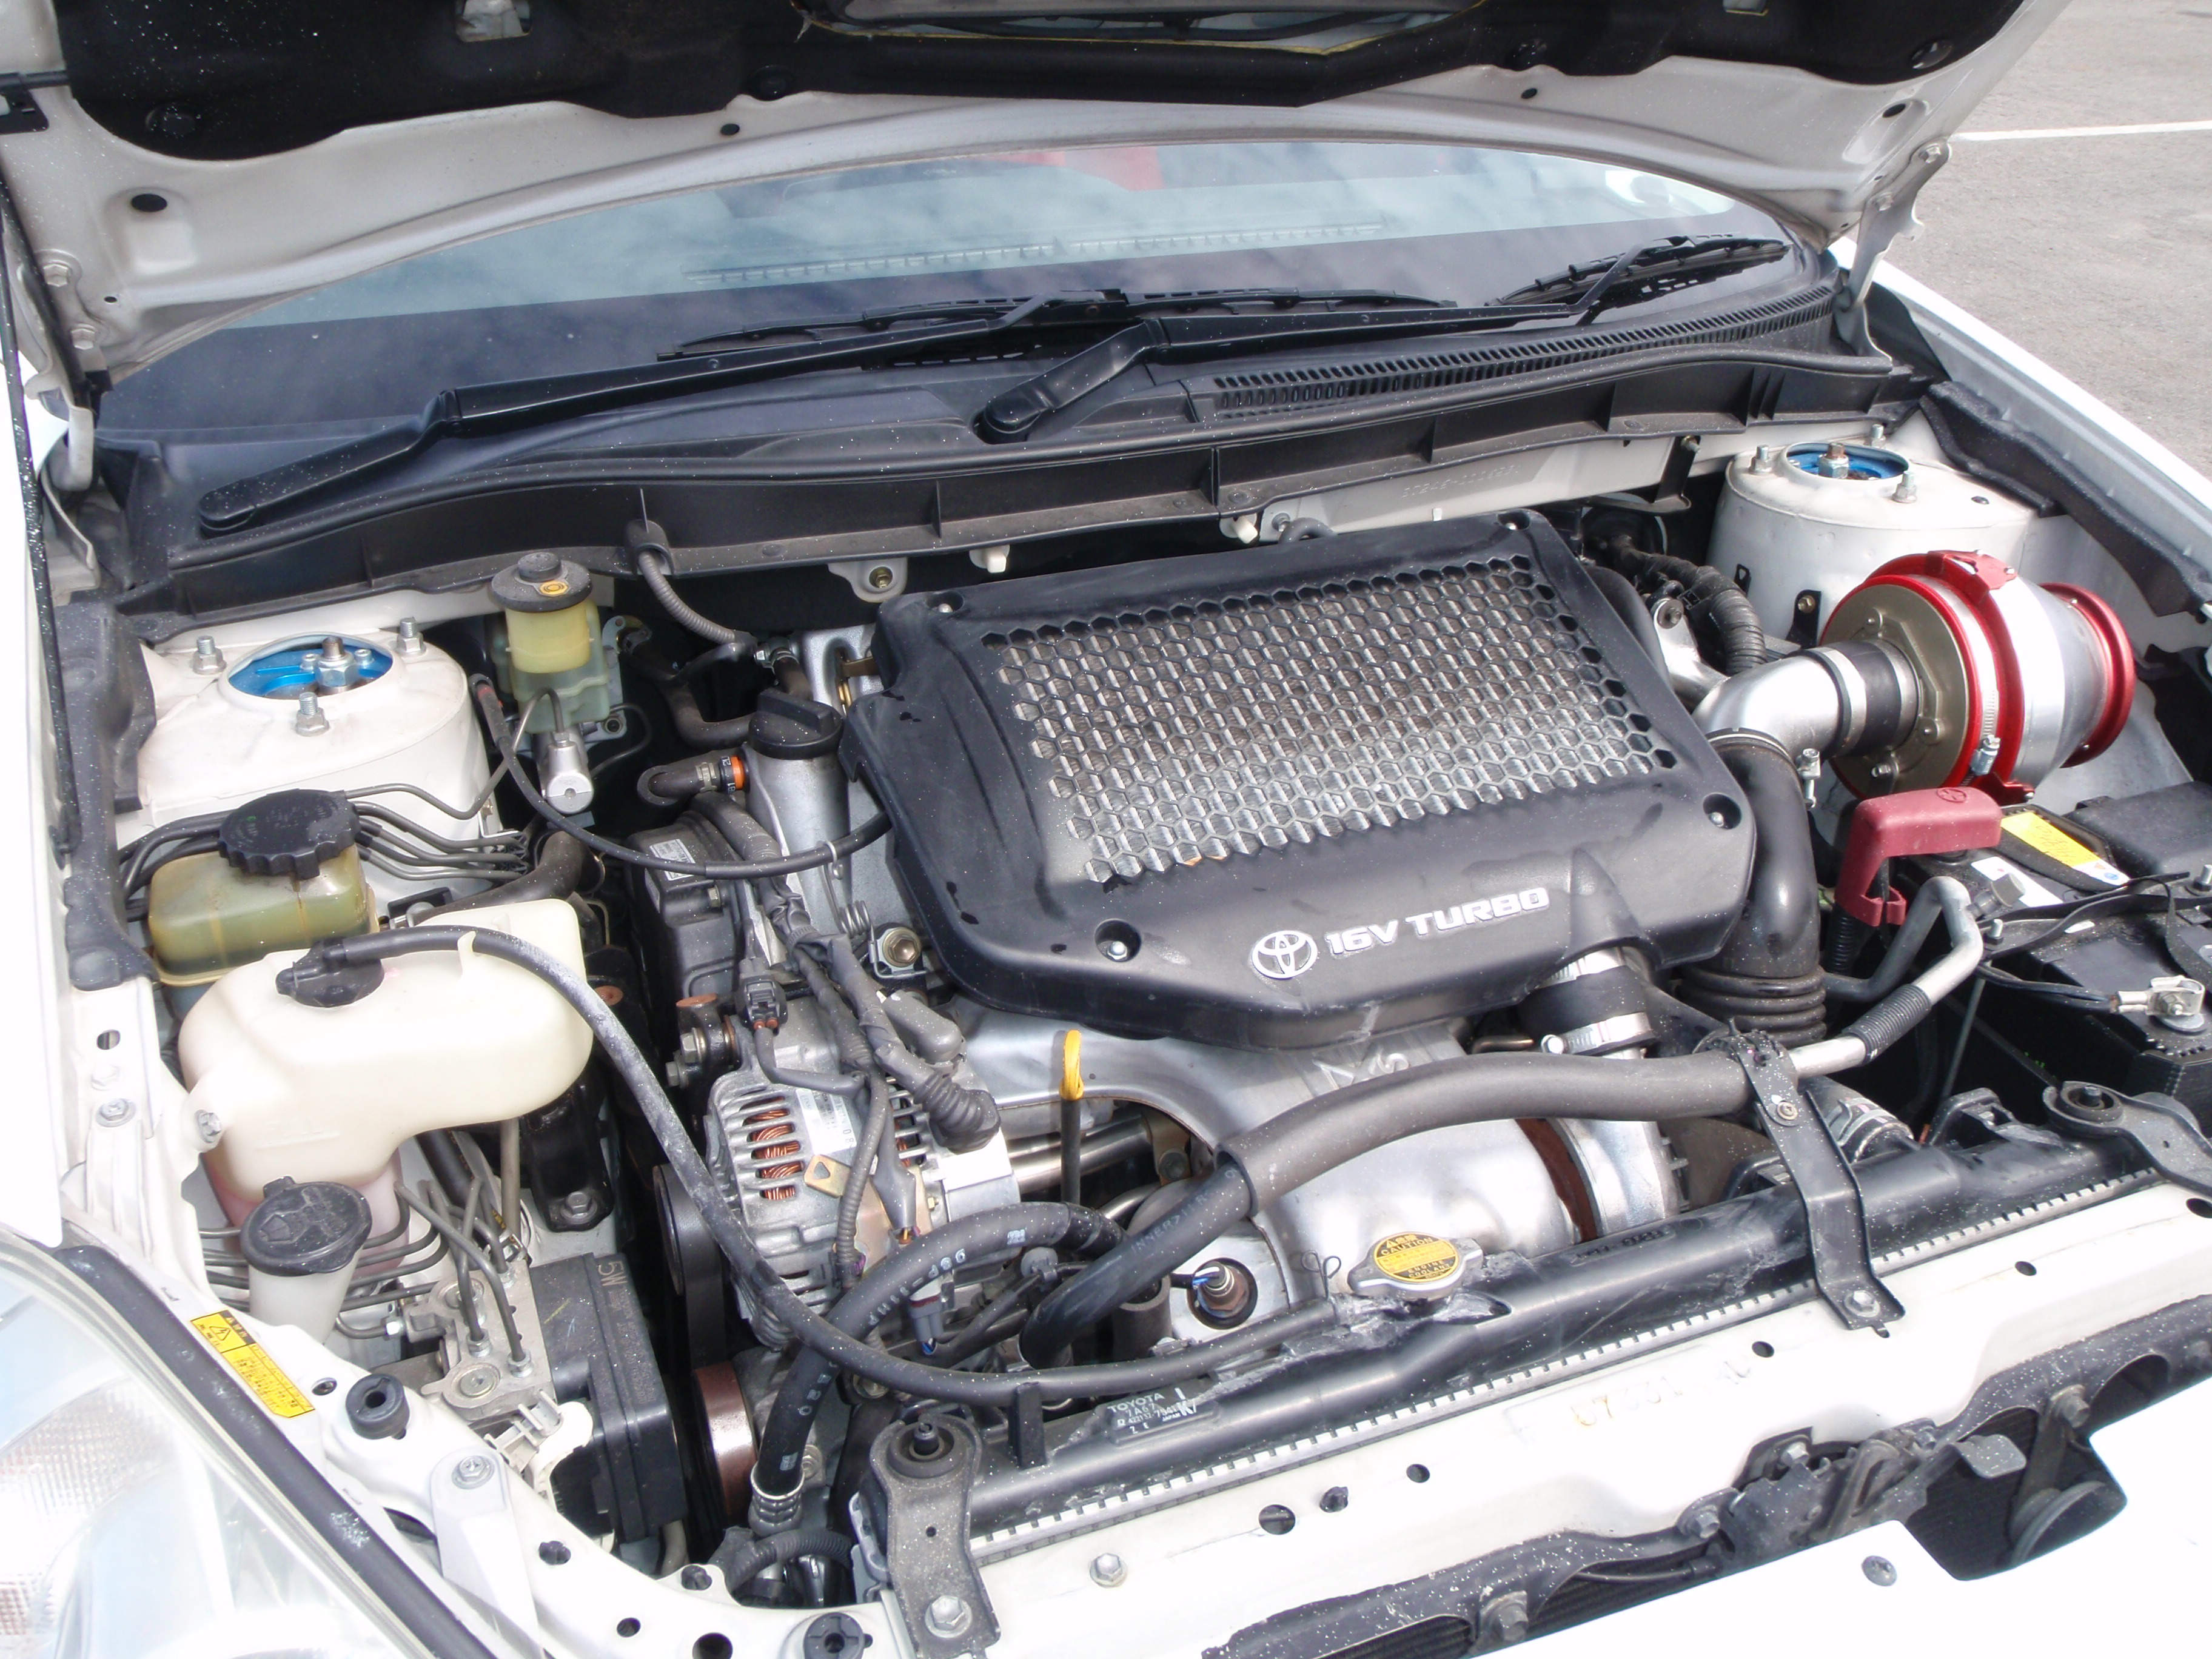 2003 Toyota Caldina GT-FOUR 2L 4WD turbo engine